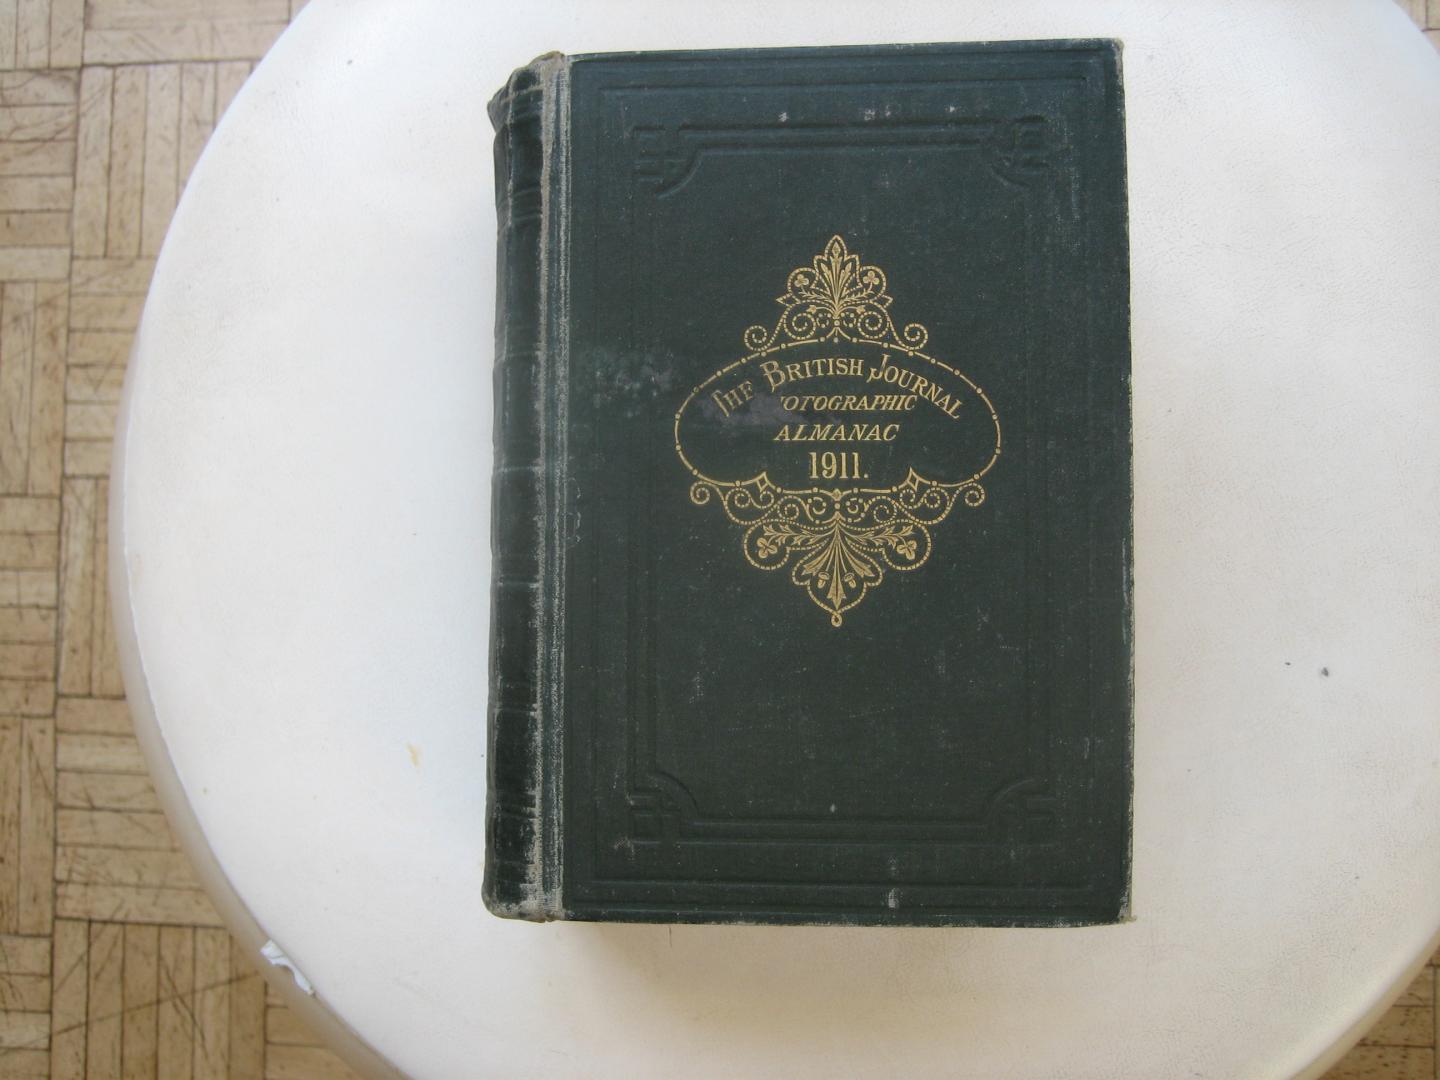 George E. Brown: Editor - The British Photographic Almanac 1911